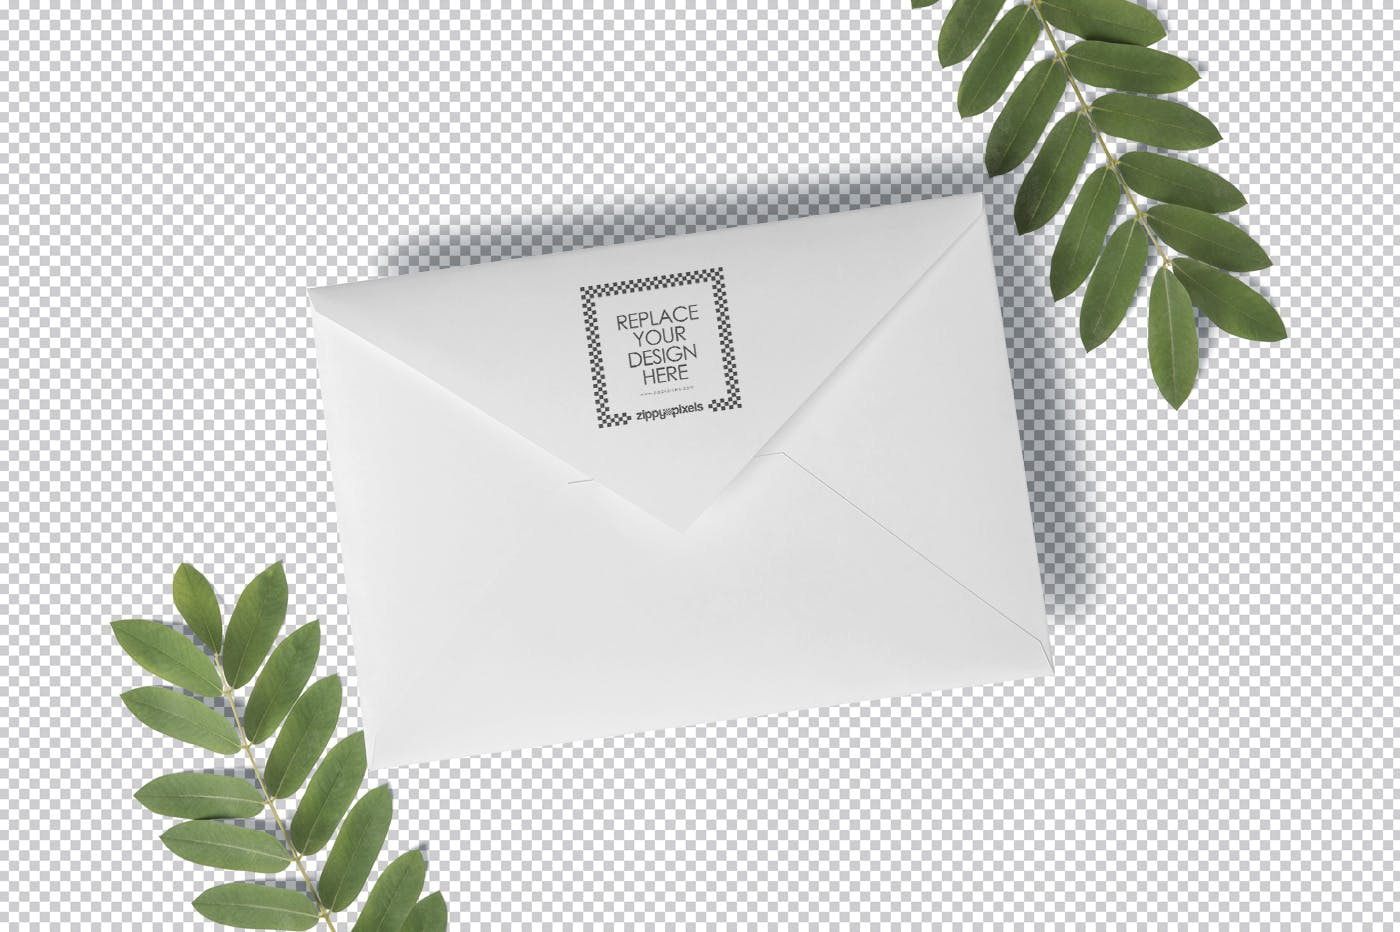 C5尺寸规格企业信封设计图样机第一素材精选PSD模板 C5 Envelope Mockups插图(5)